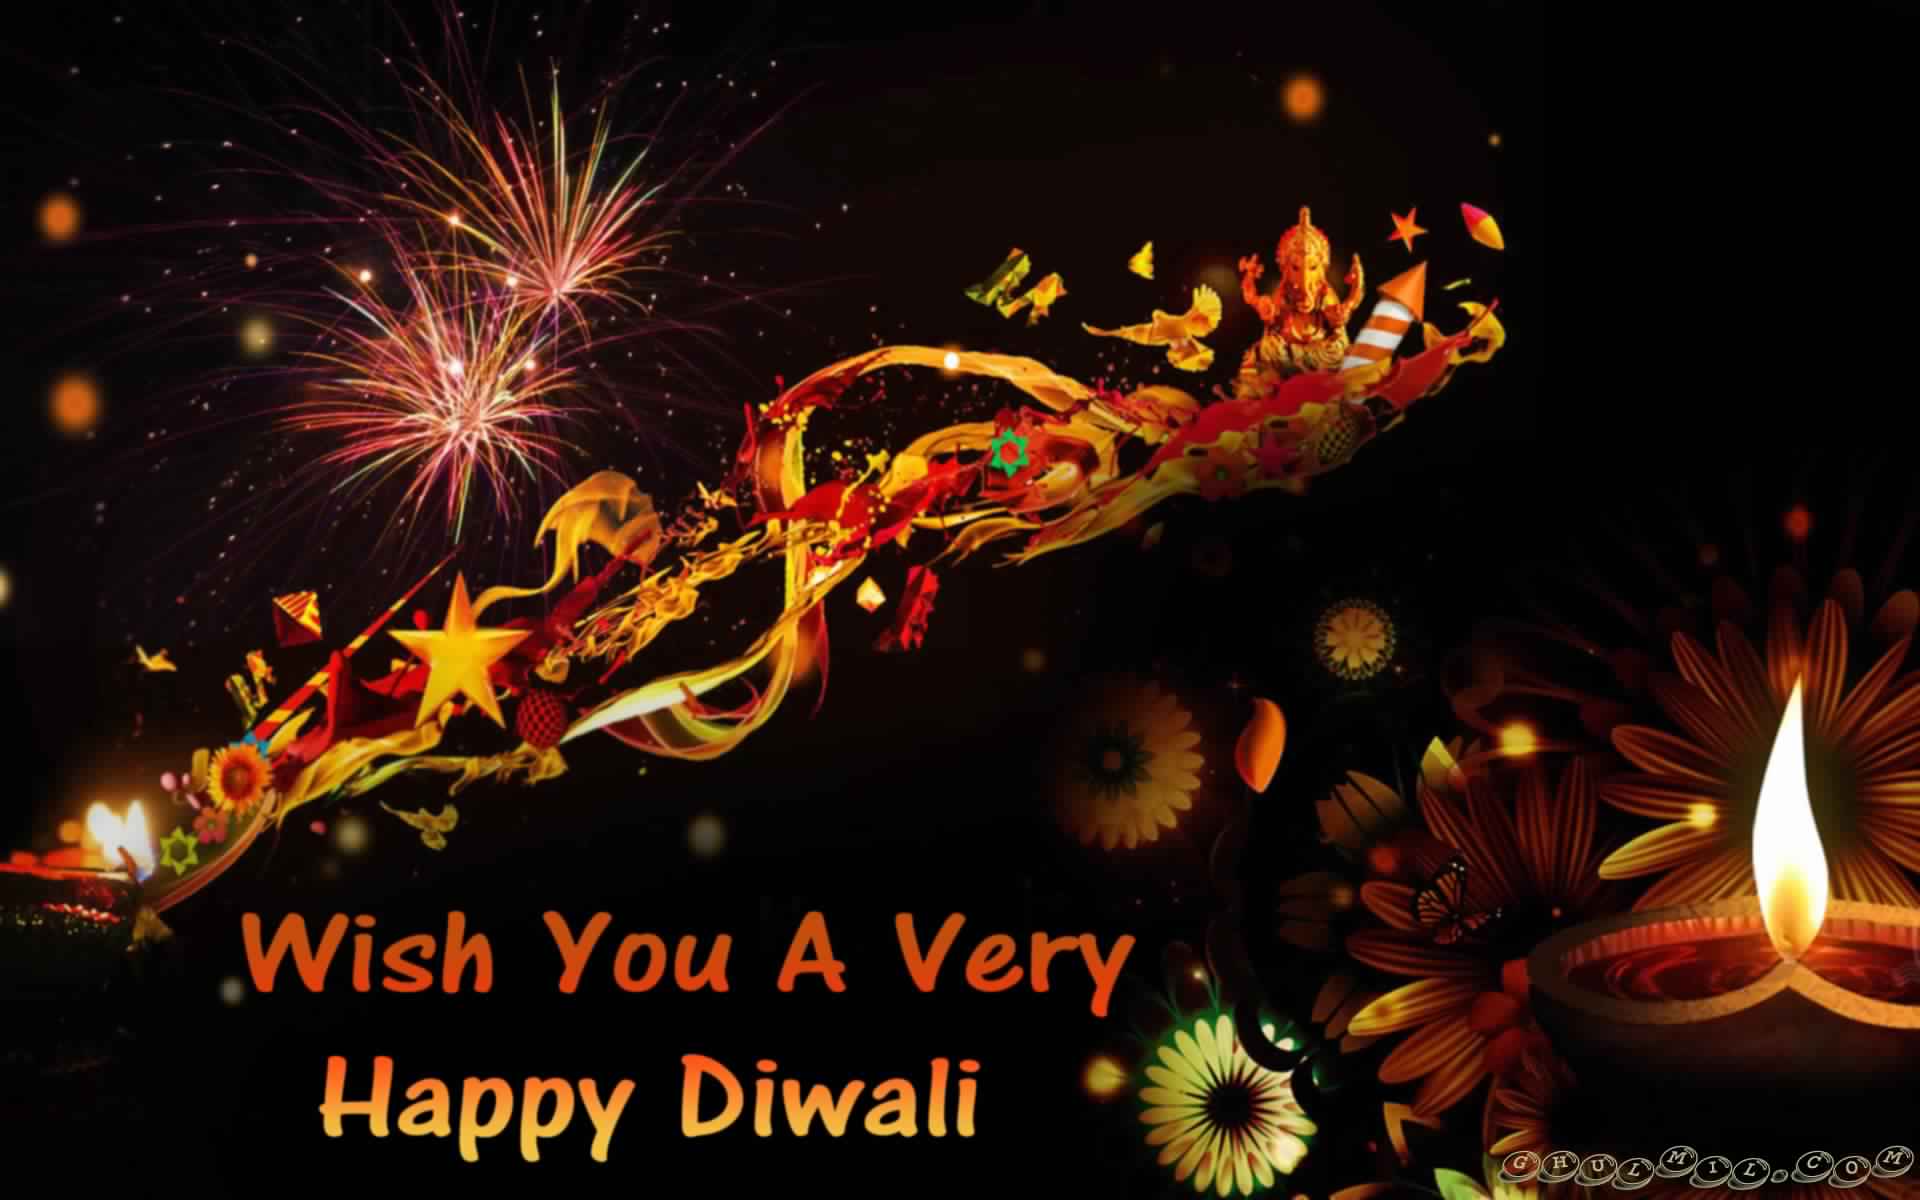 Diwali Wallpaper Free Download - Diwali Wallpapers Free Download - HD Wallpaper 